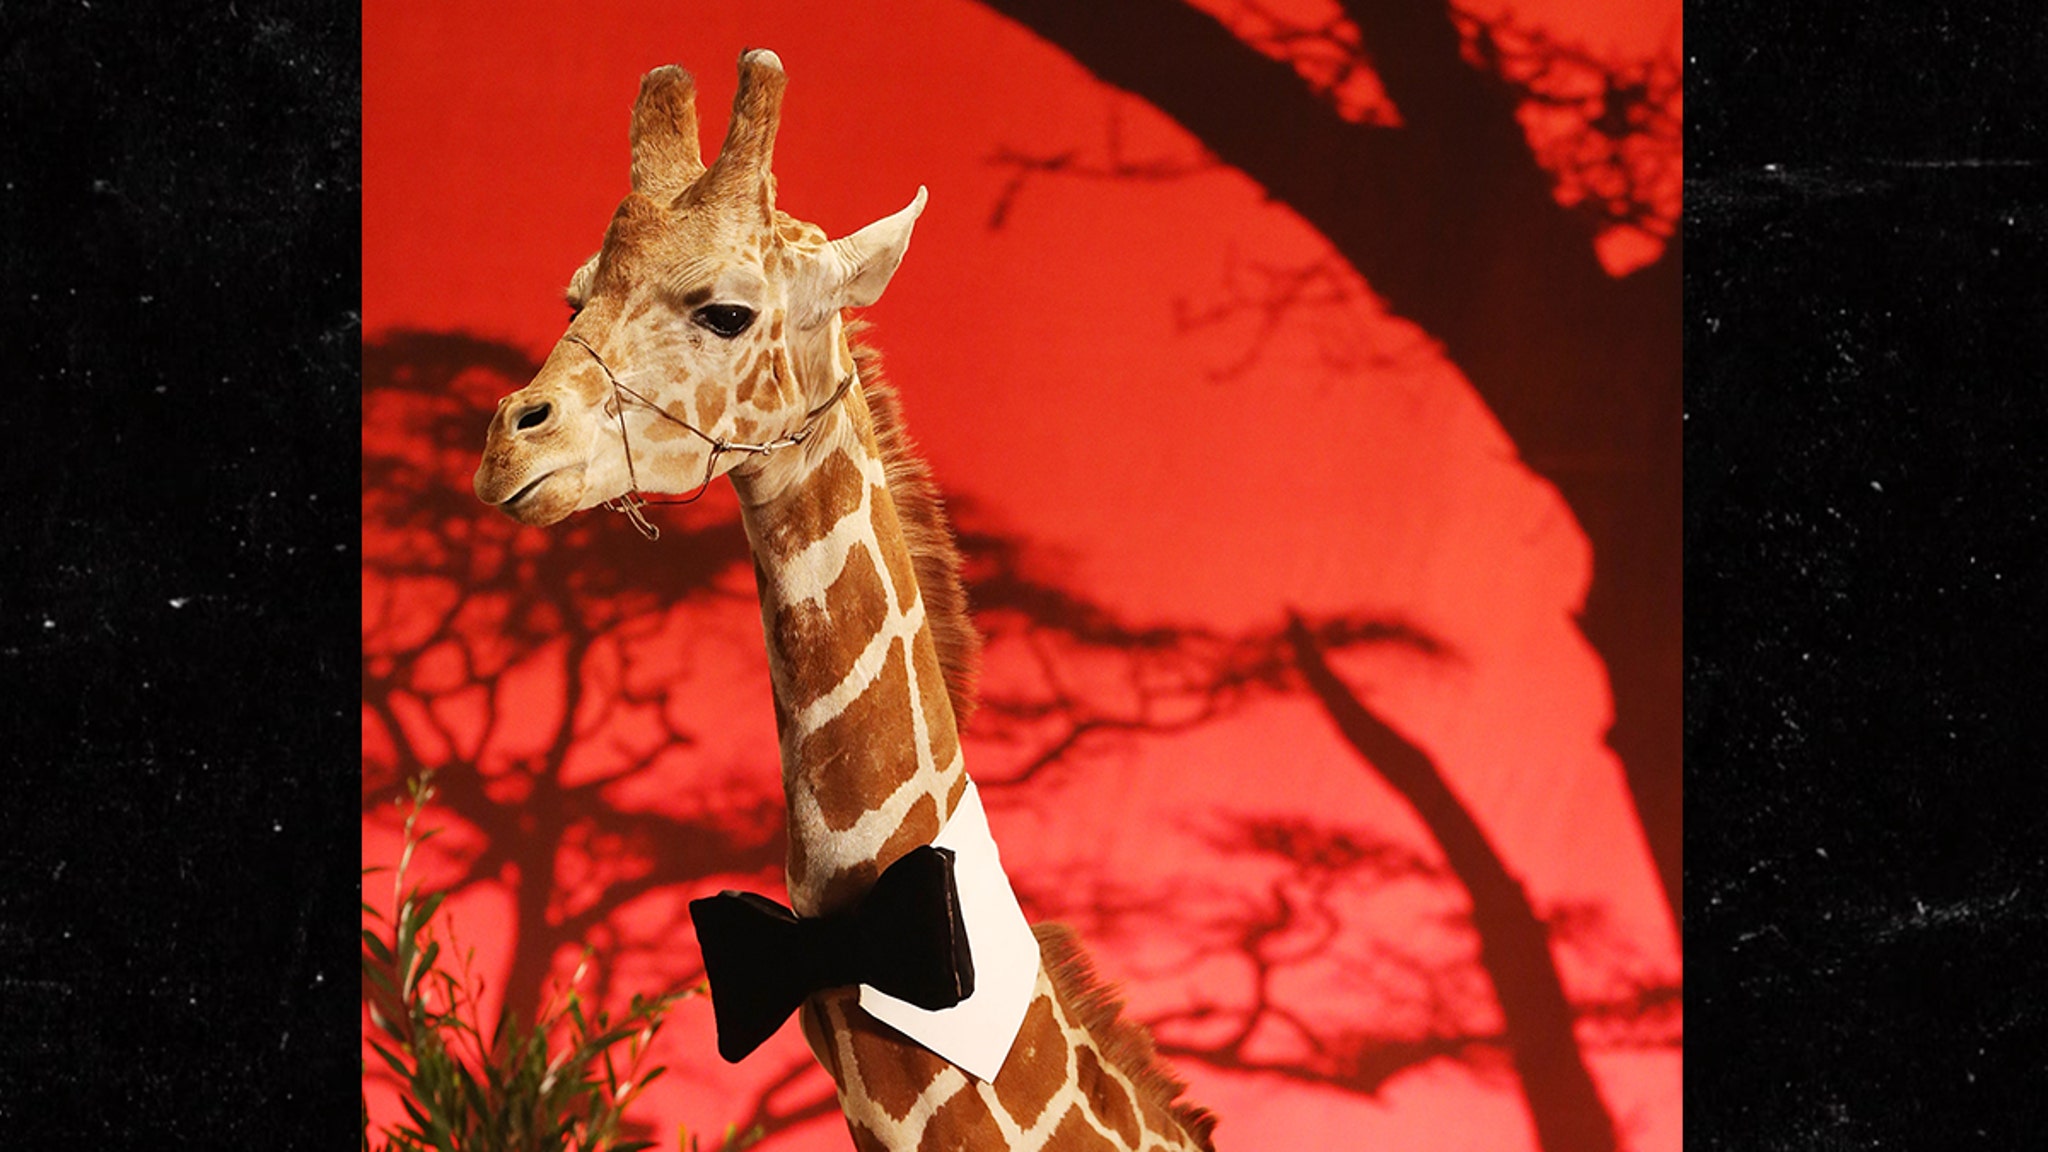 Stanley, the giraffe seized as evidence at the Malibu Wine Safaris